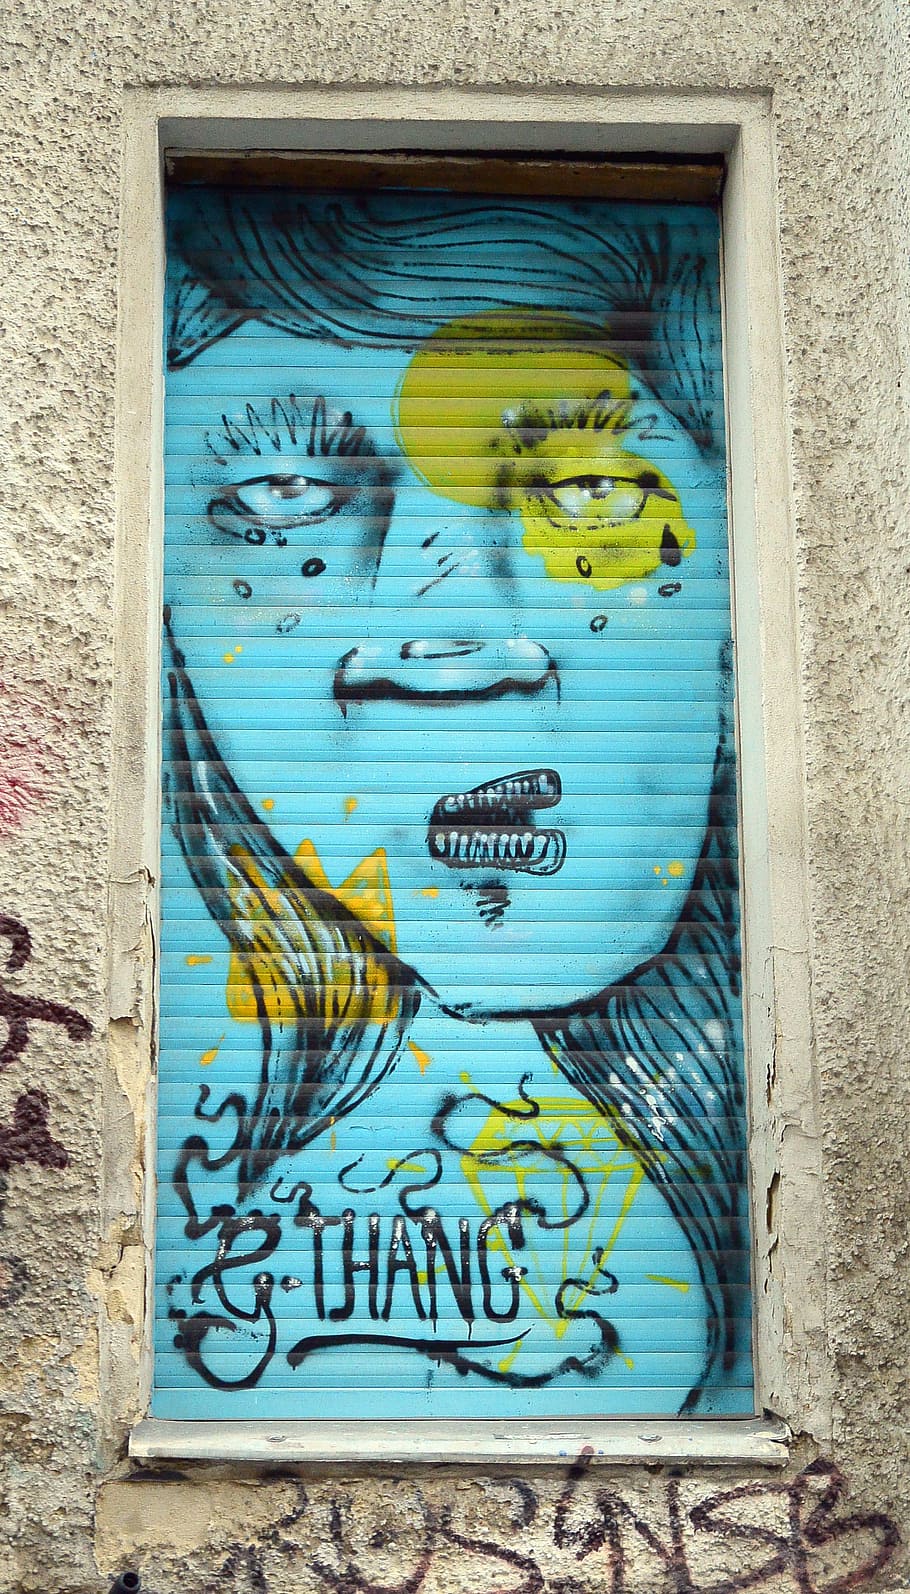 street art, graffiti, wall painting, urban art, alternative, sprayer, berlin, kreuzberg, roller shutter, blinds